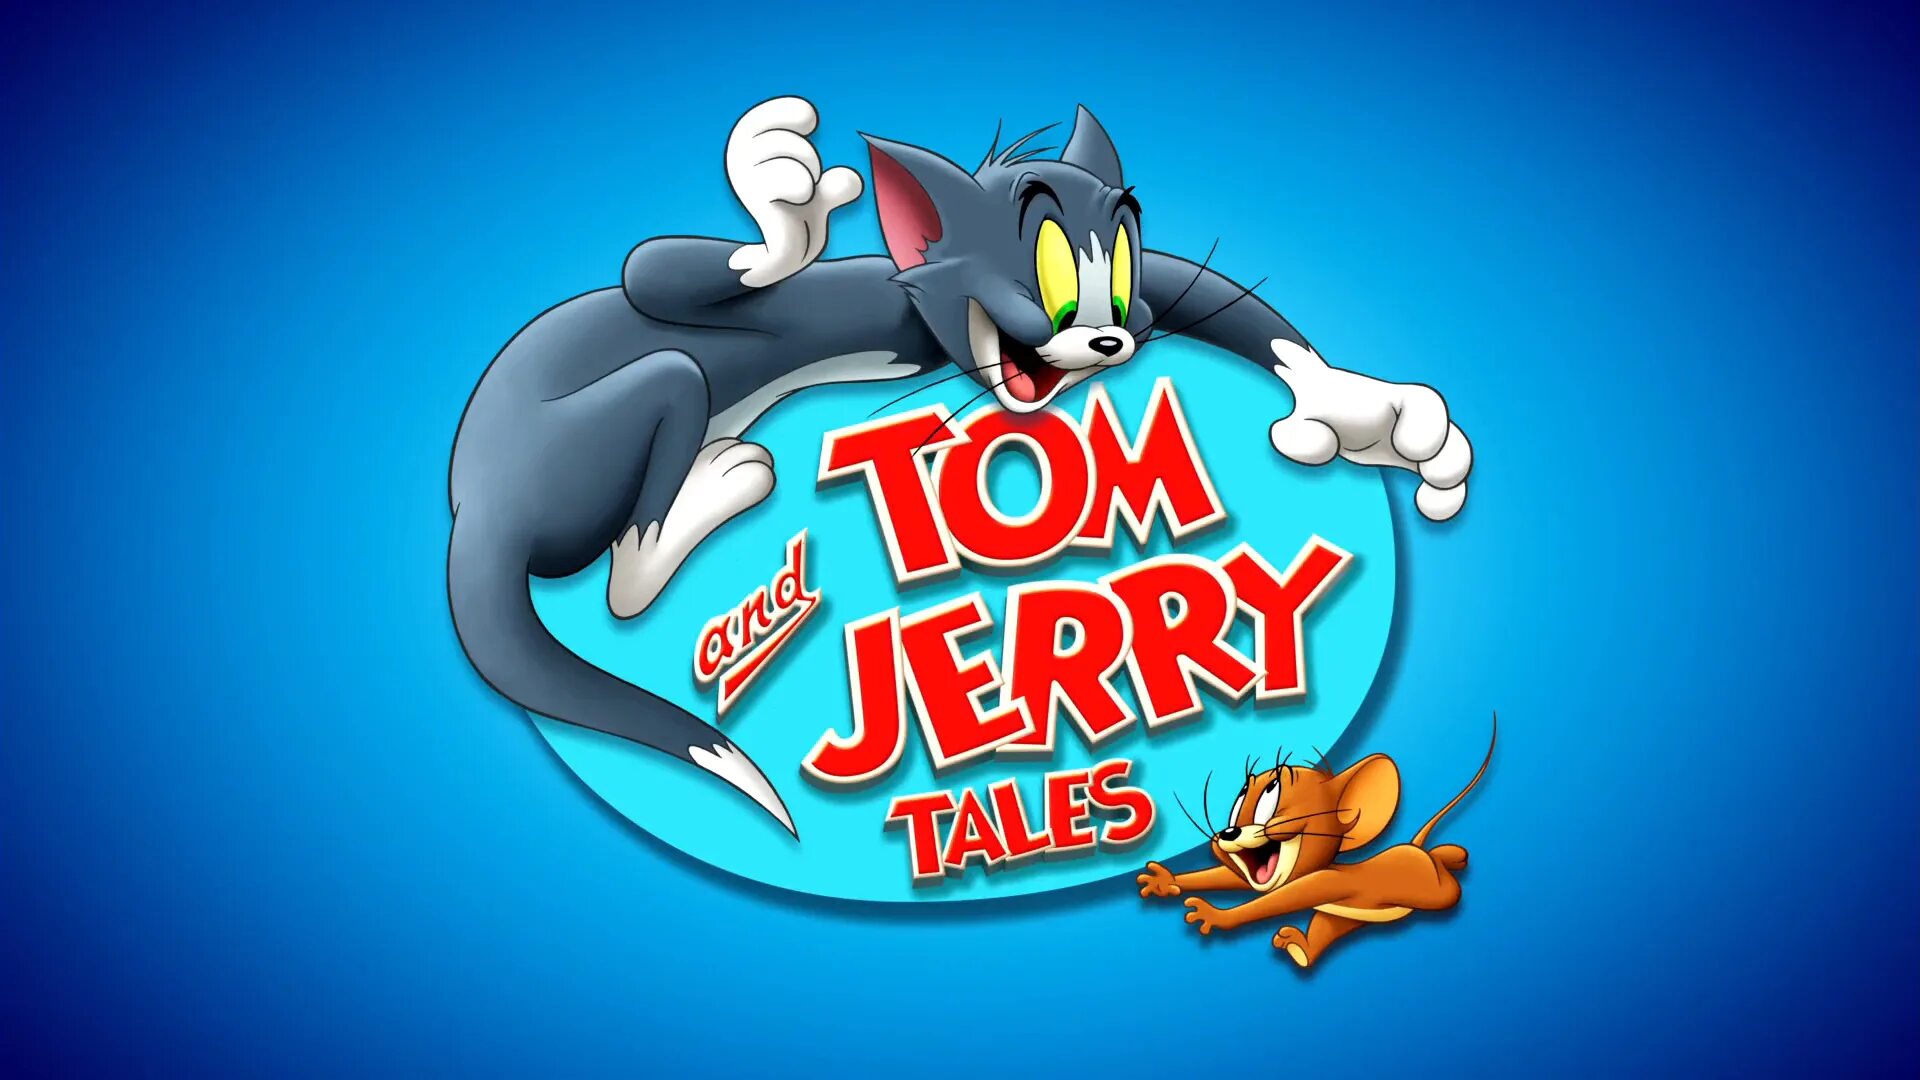 Toms tales. Tom and Jerry. Приключения Тома и Джерри 2008. Tom and Jerry 2. Том и Джерри сказки 2006.